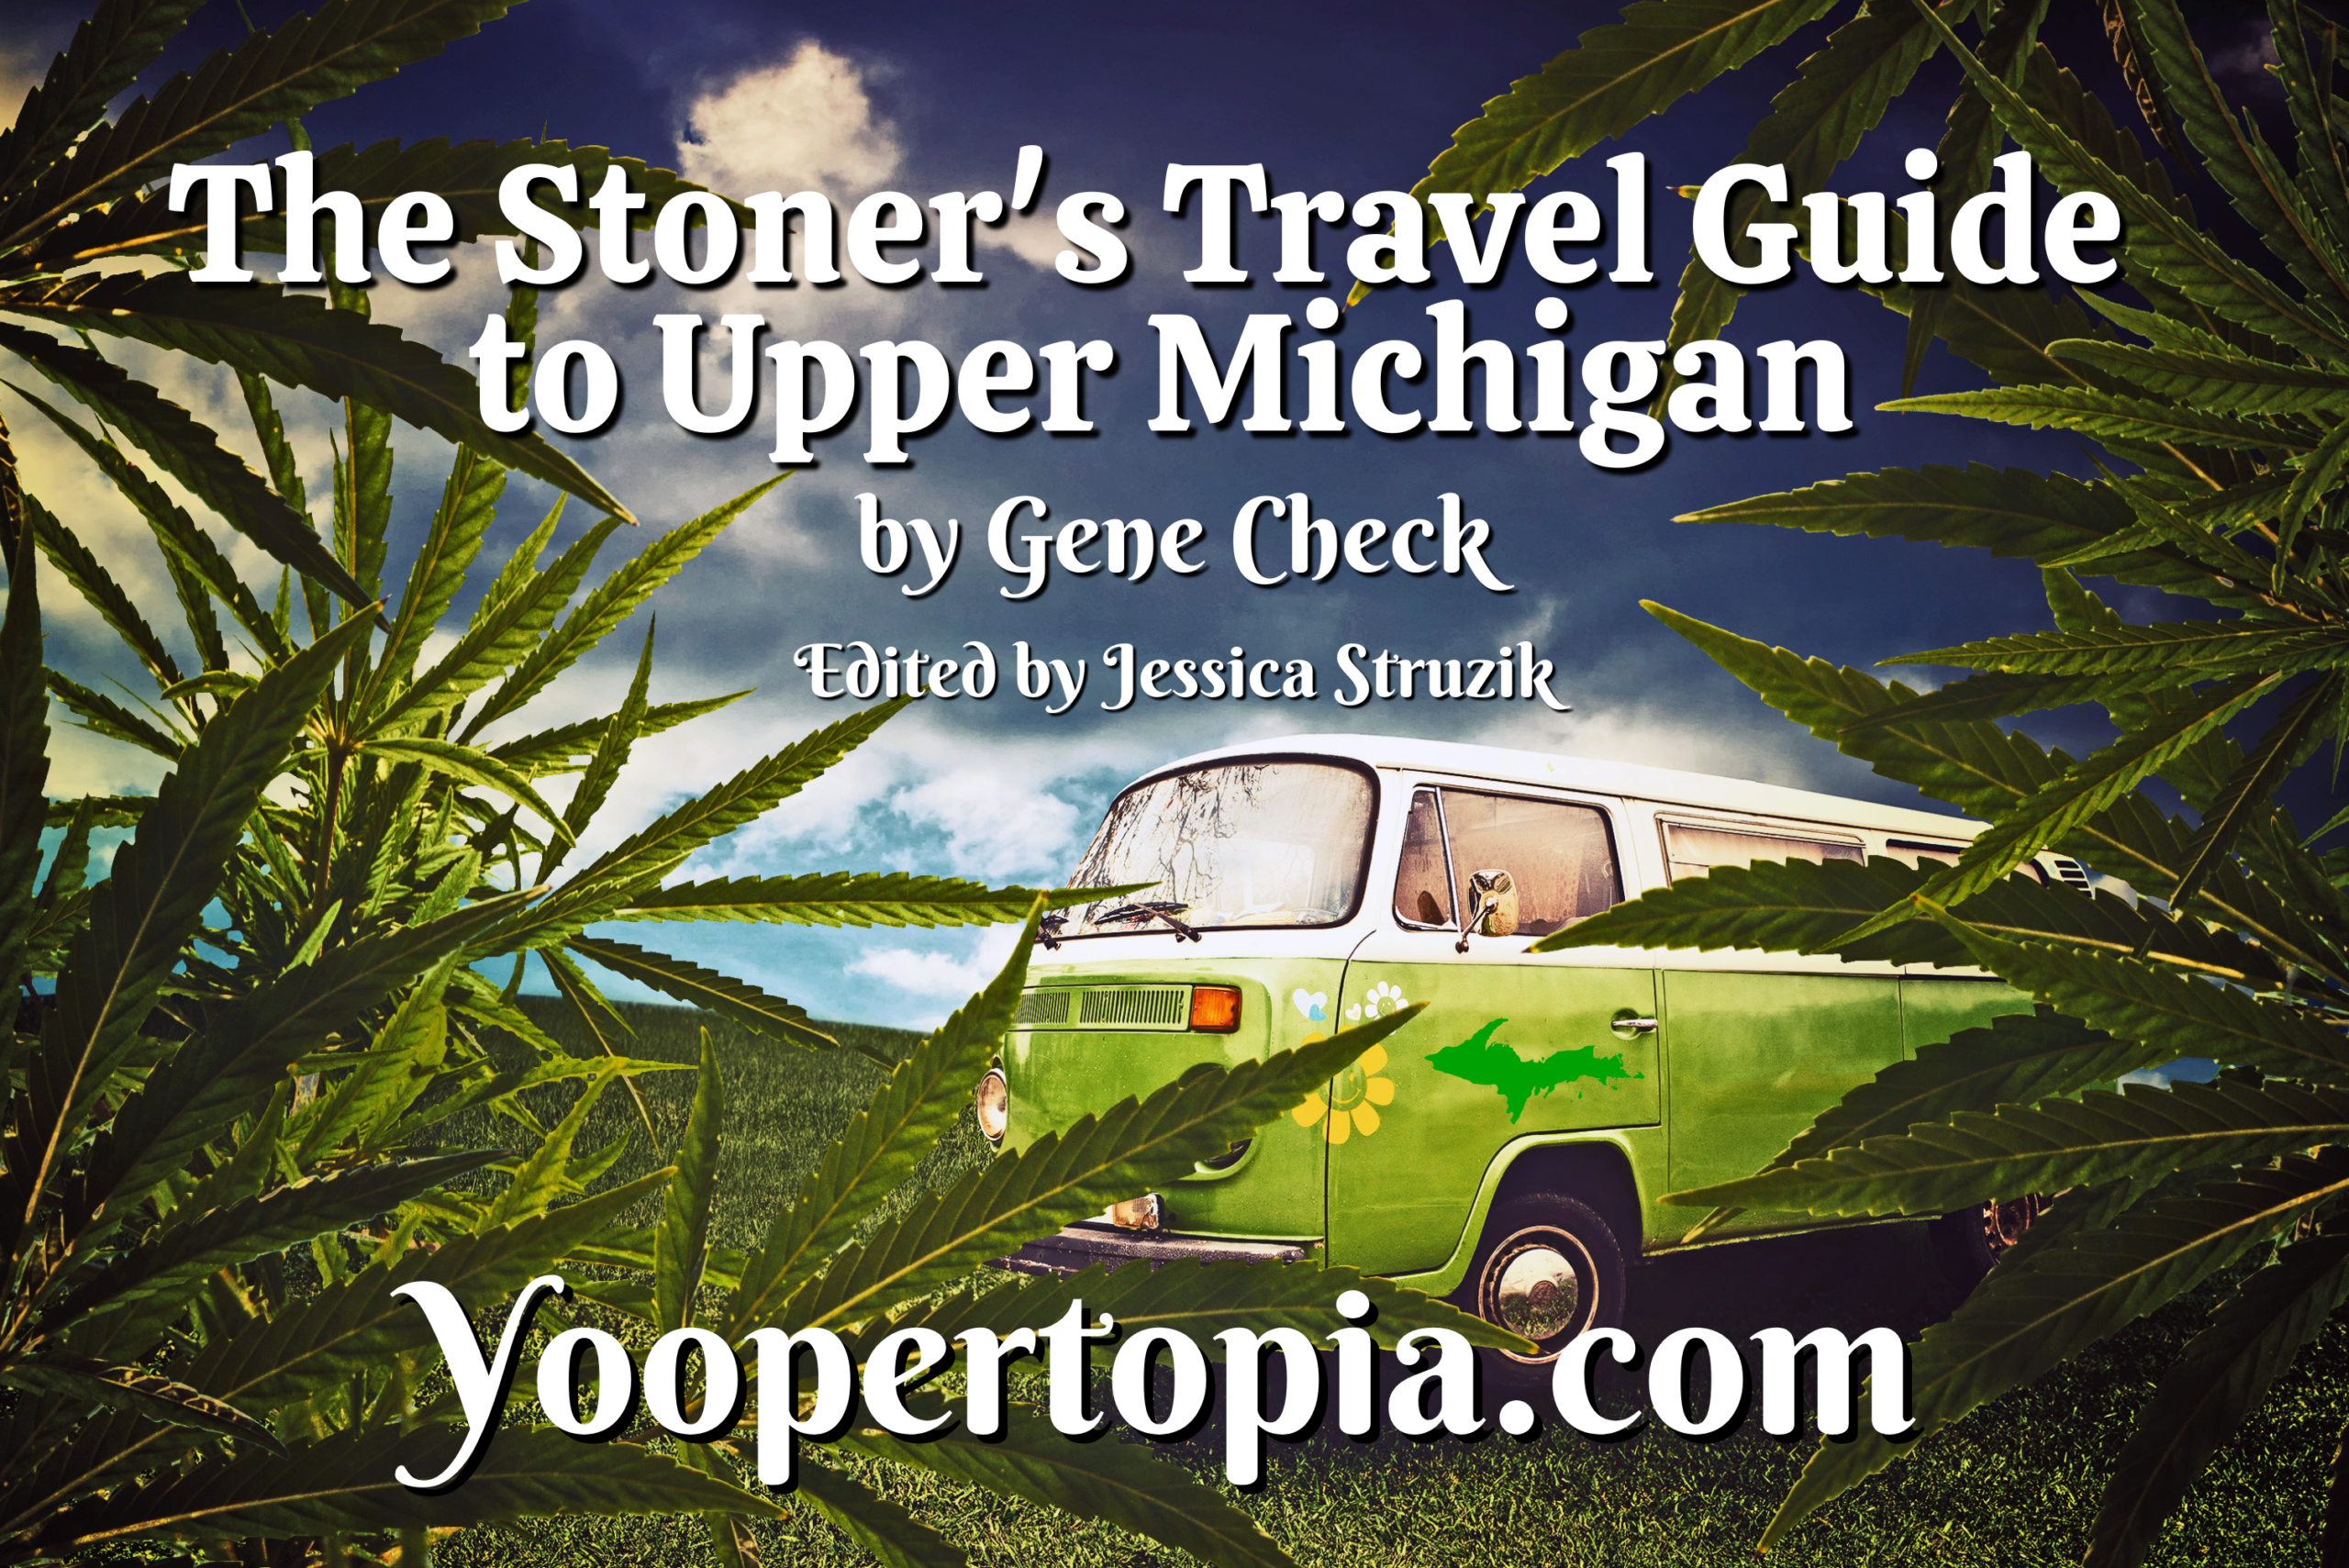 Yoopertopia.com Promo Header for The Stoner's Travel Guide to Upper Michigan